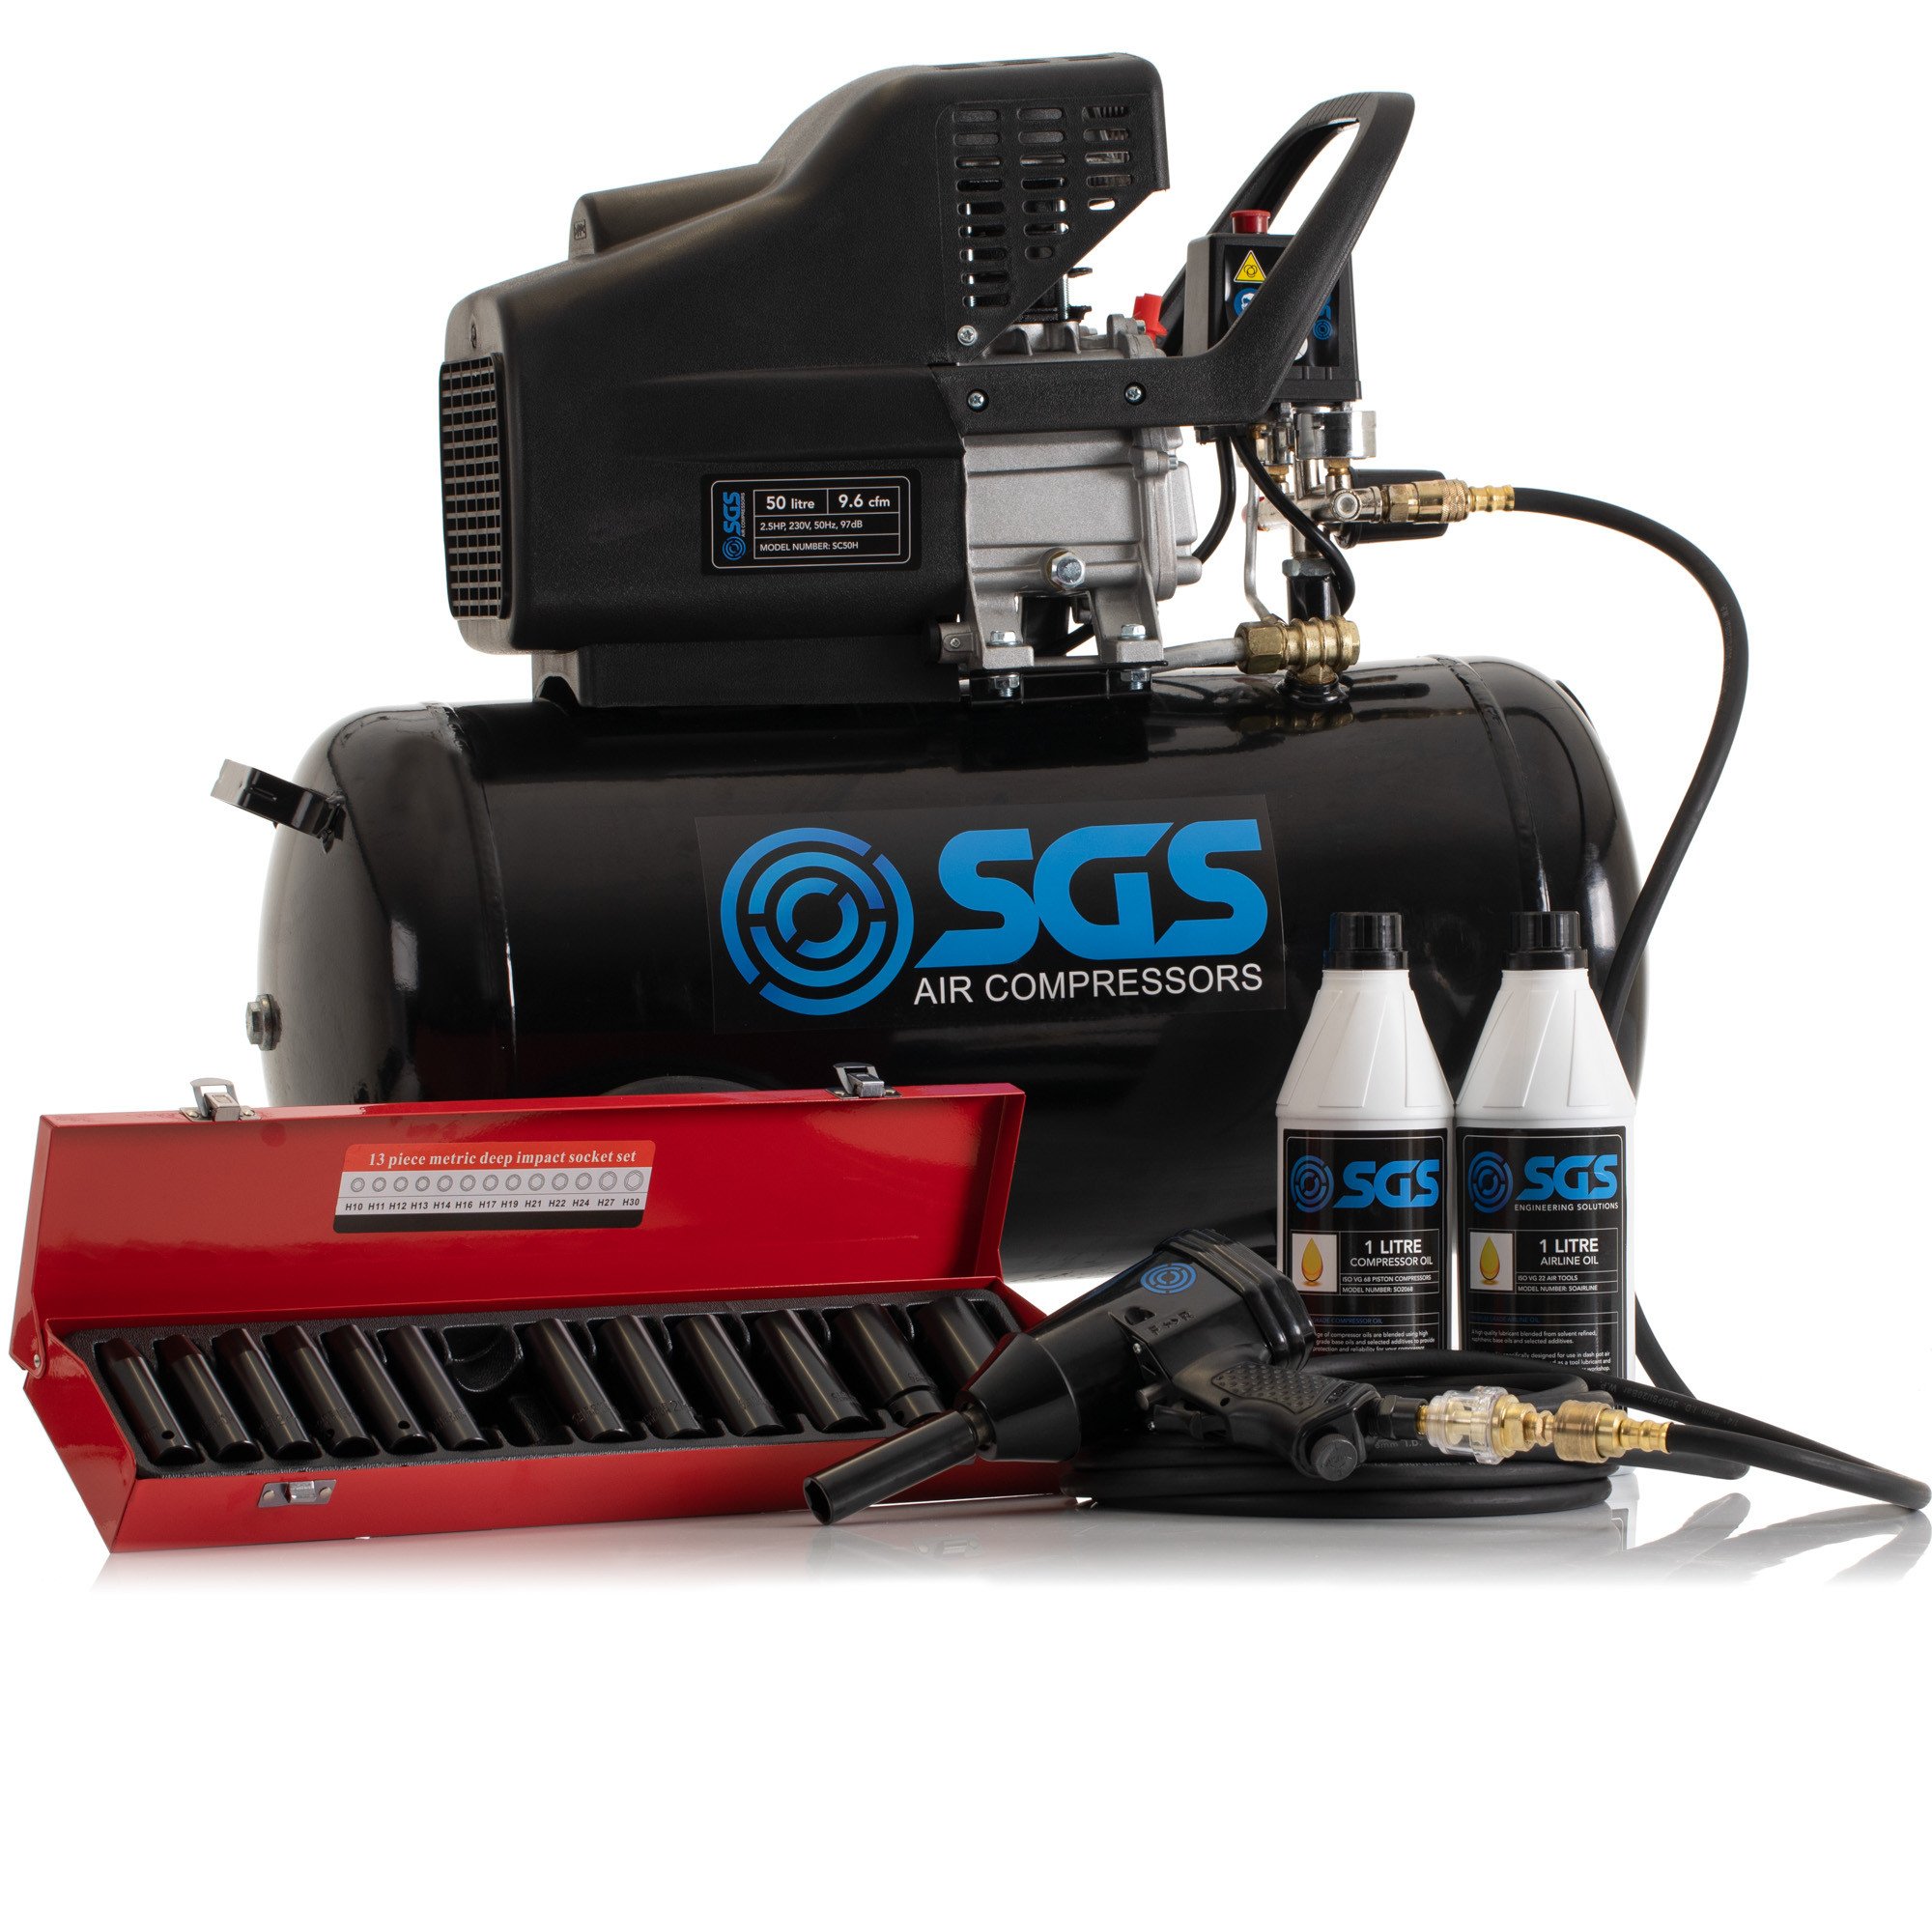 SGS 50升直接驱动空气压缩机和1/2“冲击扳手套件，插座- 9.6CFM 2.5HP 50L